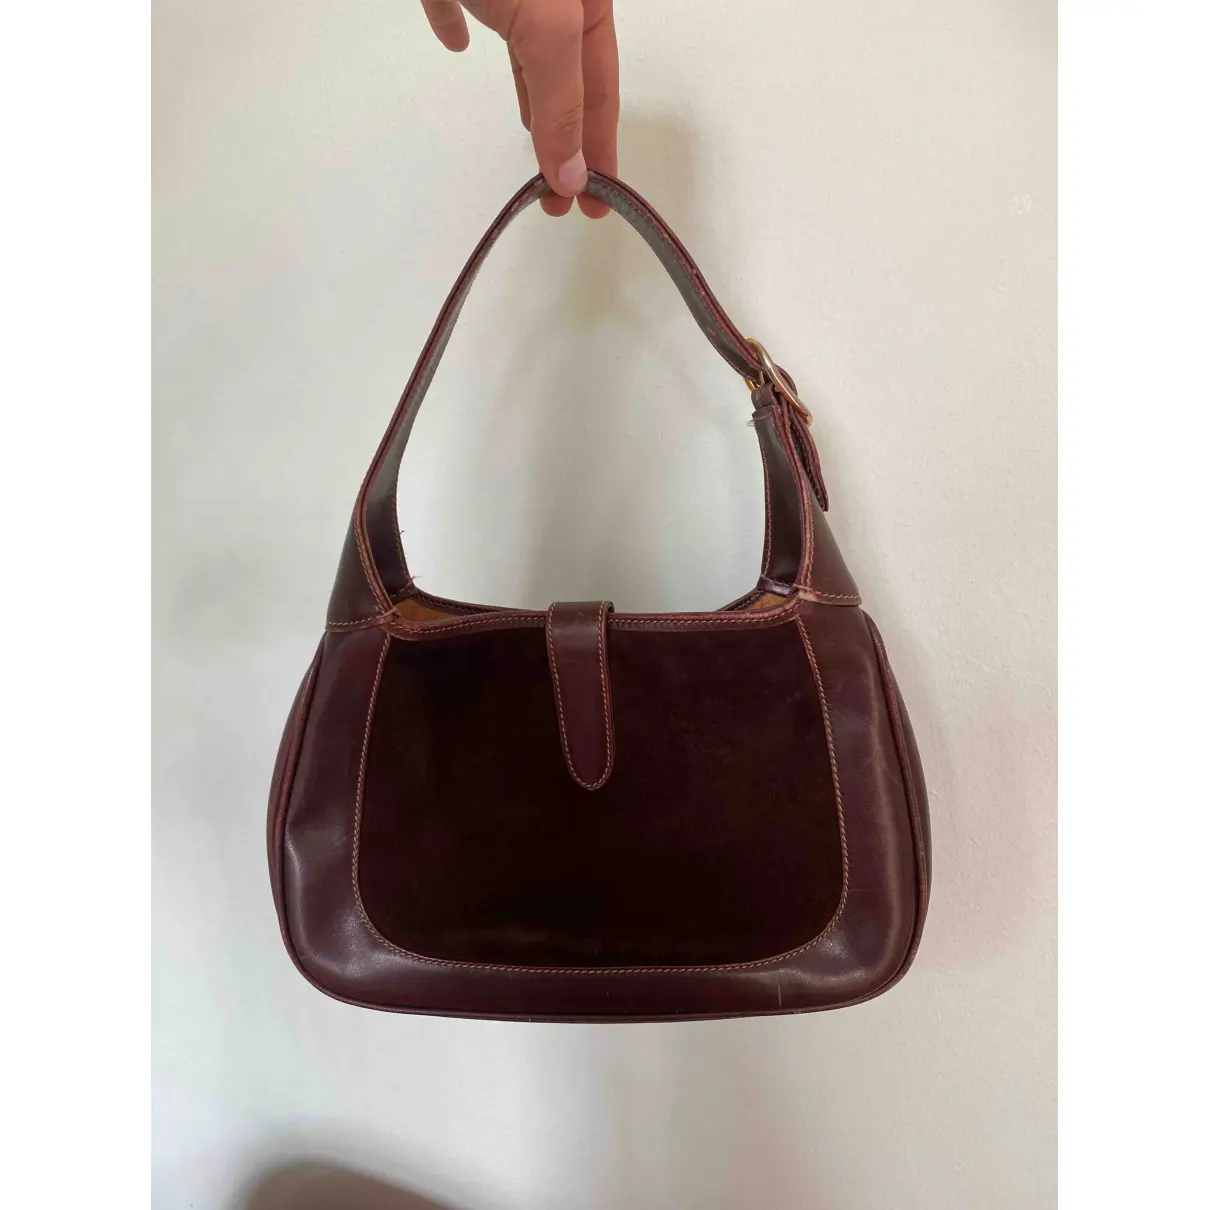 Buy Gucci Jackie 1961 leather handbag online - Vintage